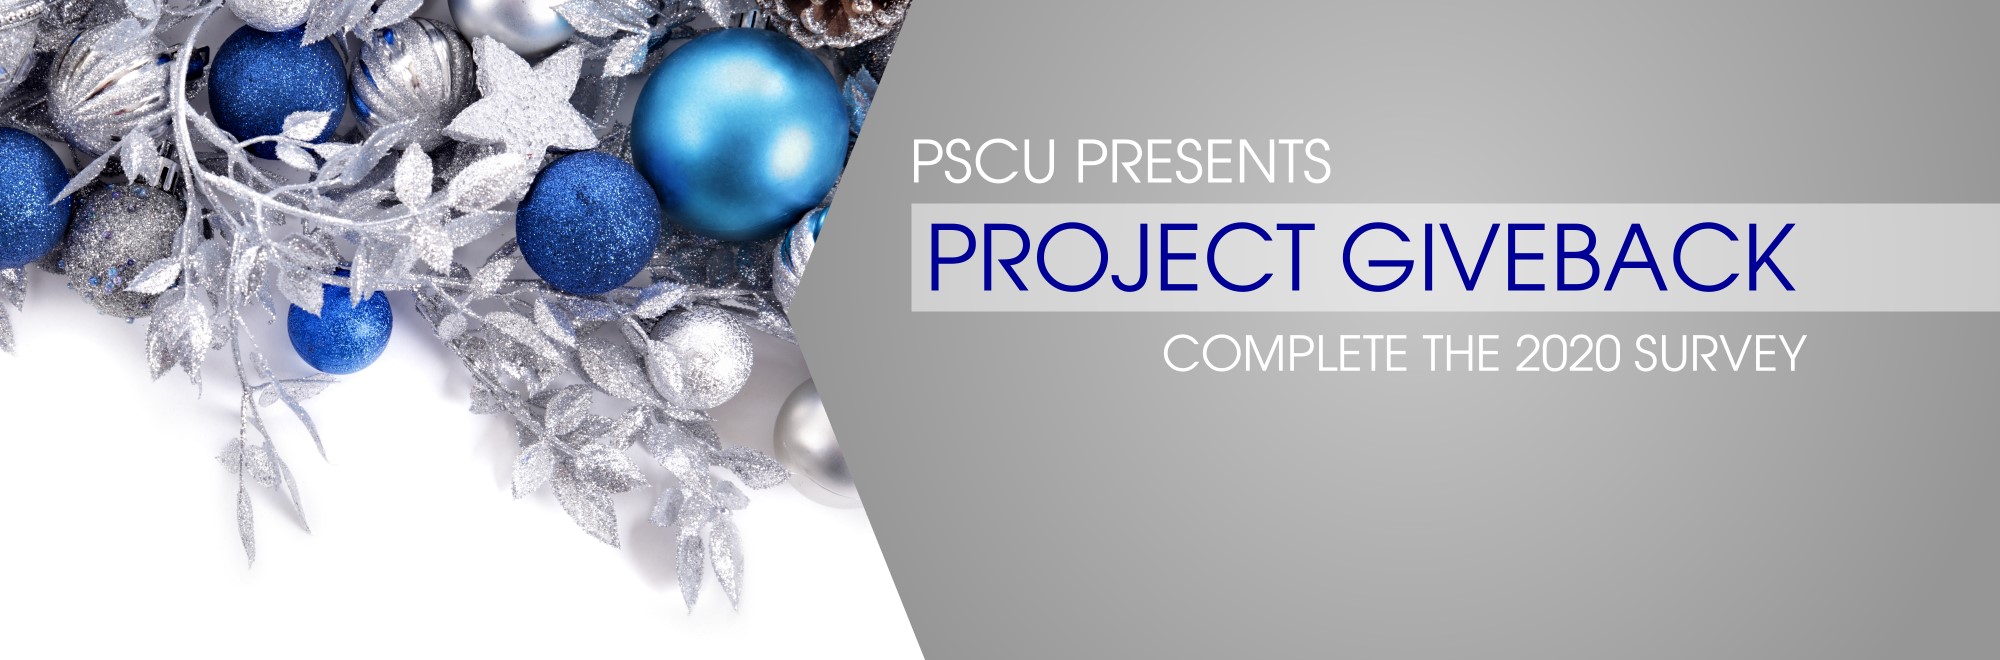 PSCU Presents Project Giveback. Complete the 2020 survey.